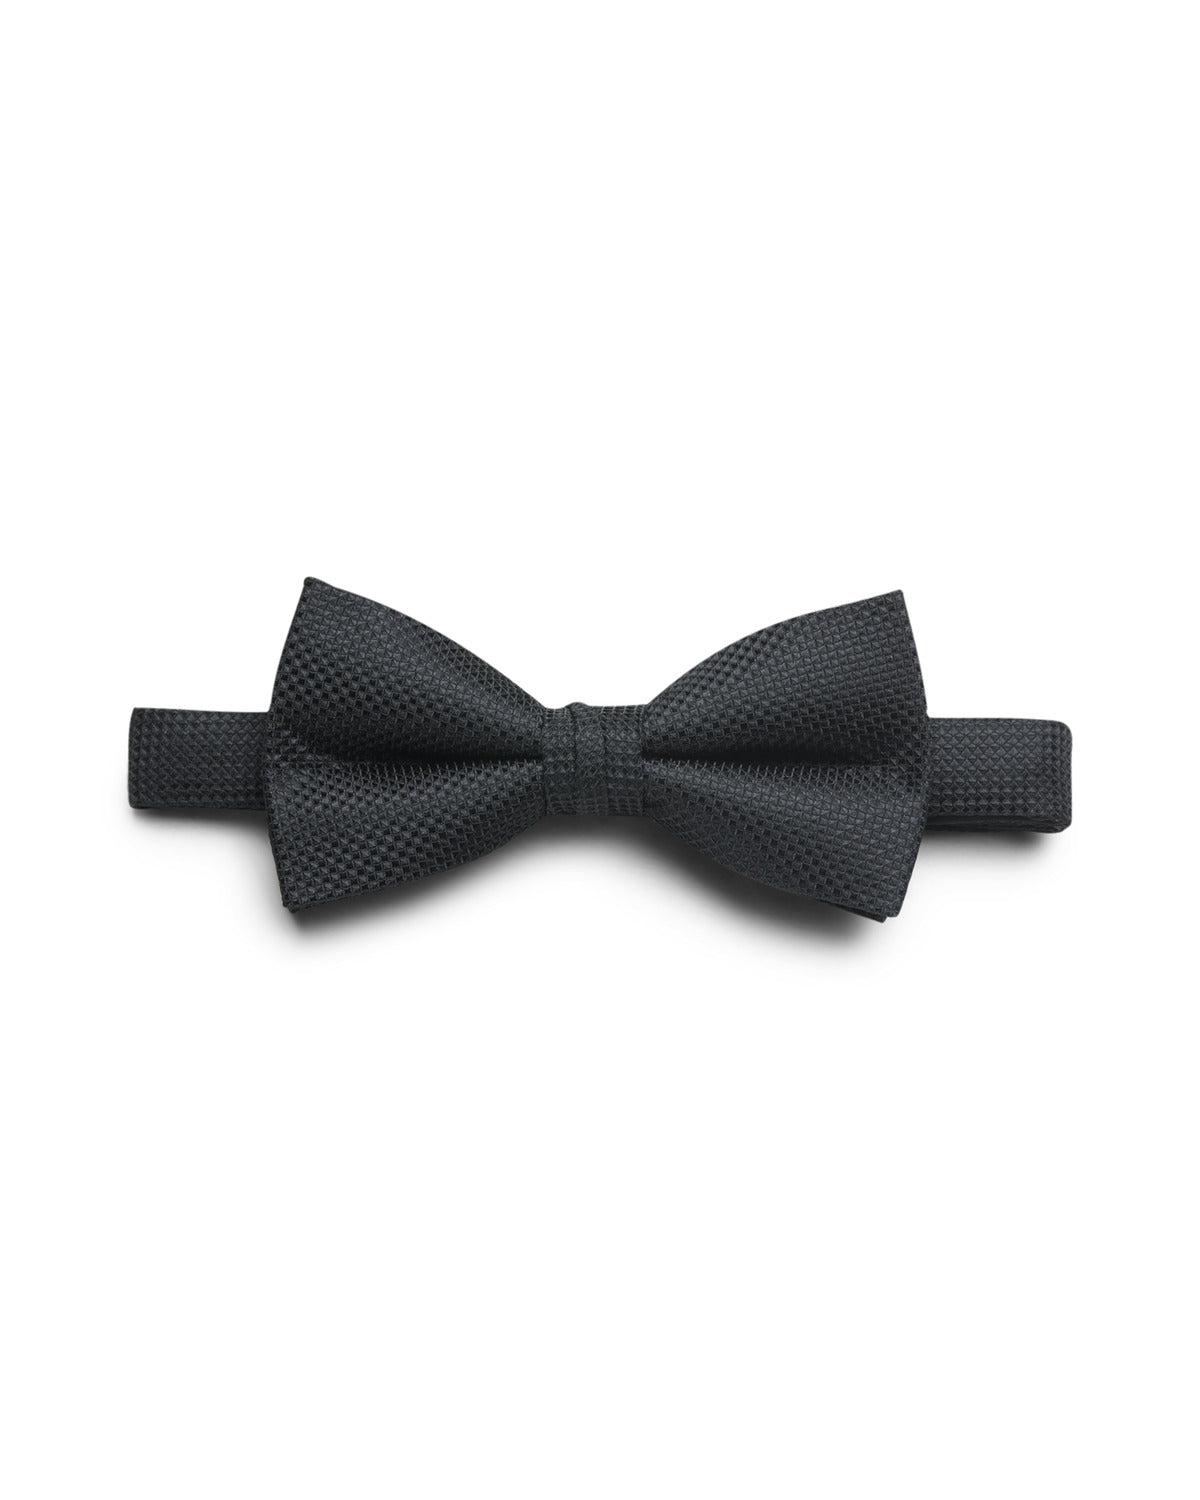 JACCOLOMBIA Bow tie - black